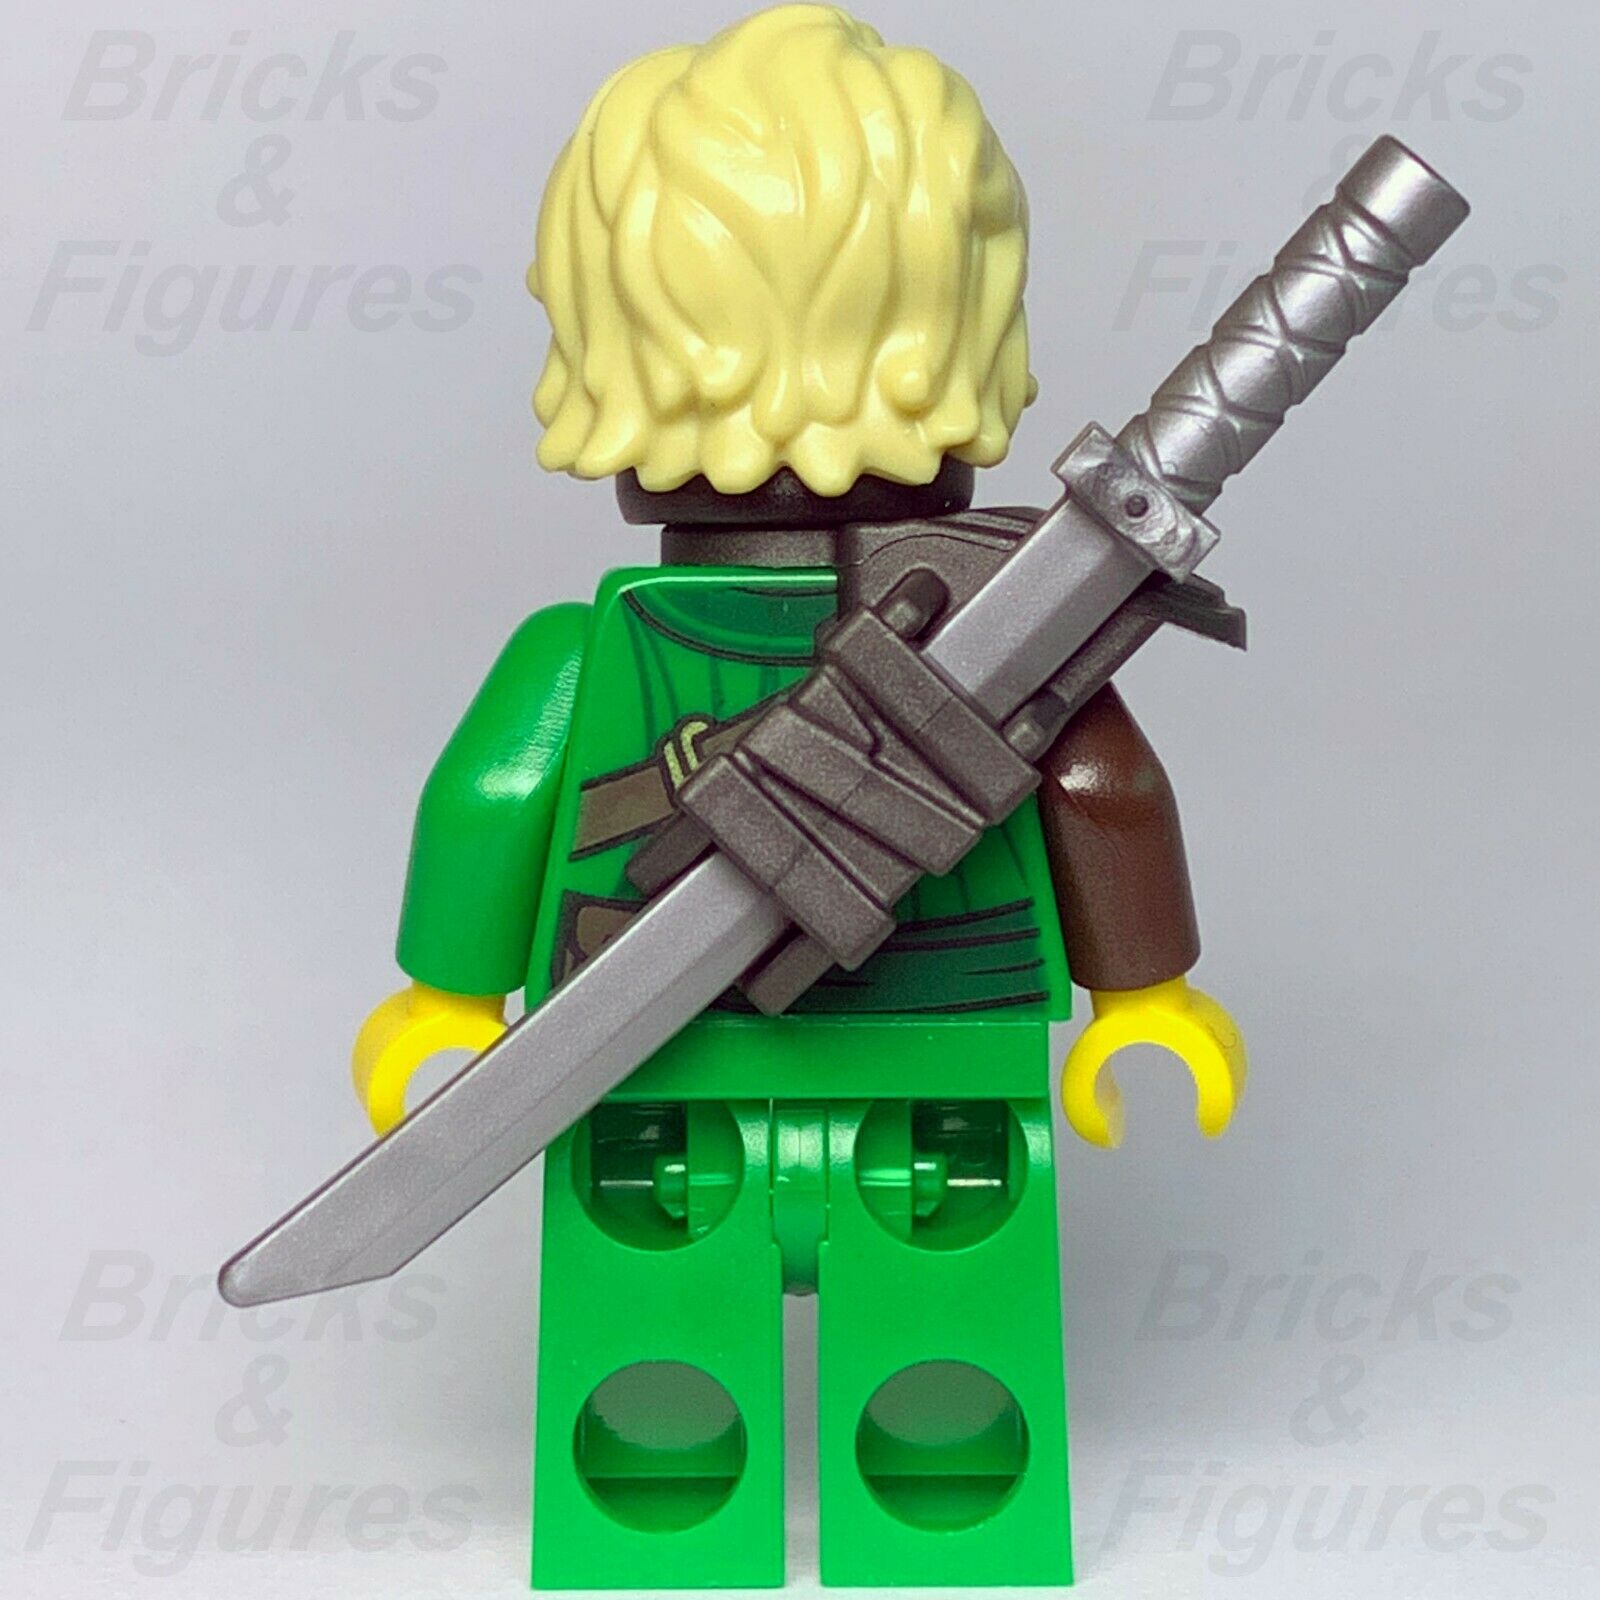 Ninjago LEGO Lloyd Garmadon Secret of the Forbidden Spinjitsu Minifigure 70671 - Bricks & Figures